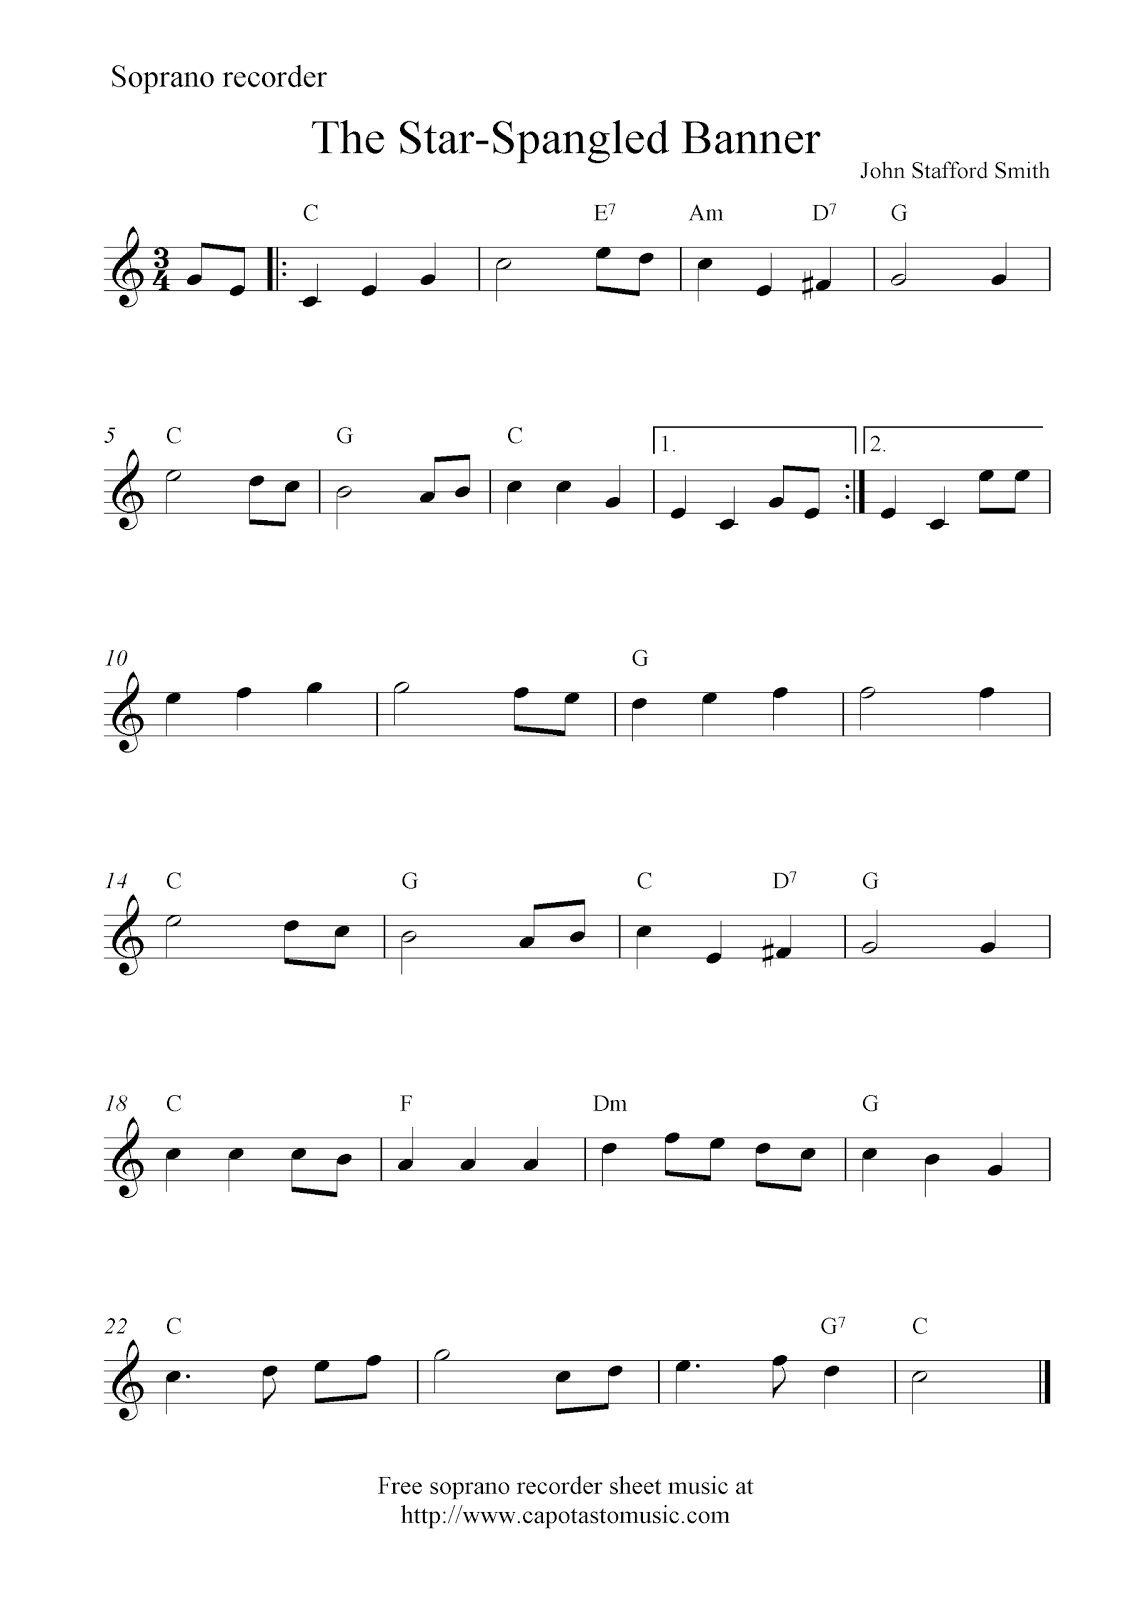 The Star-Spangled Banner, Free Soprano Recorder Sheet Music Notes - Free Printable Piano Sheet Music For The Star Spangled Banner